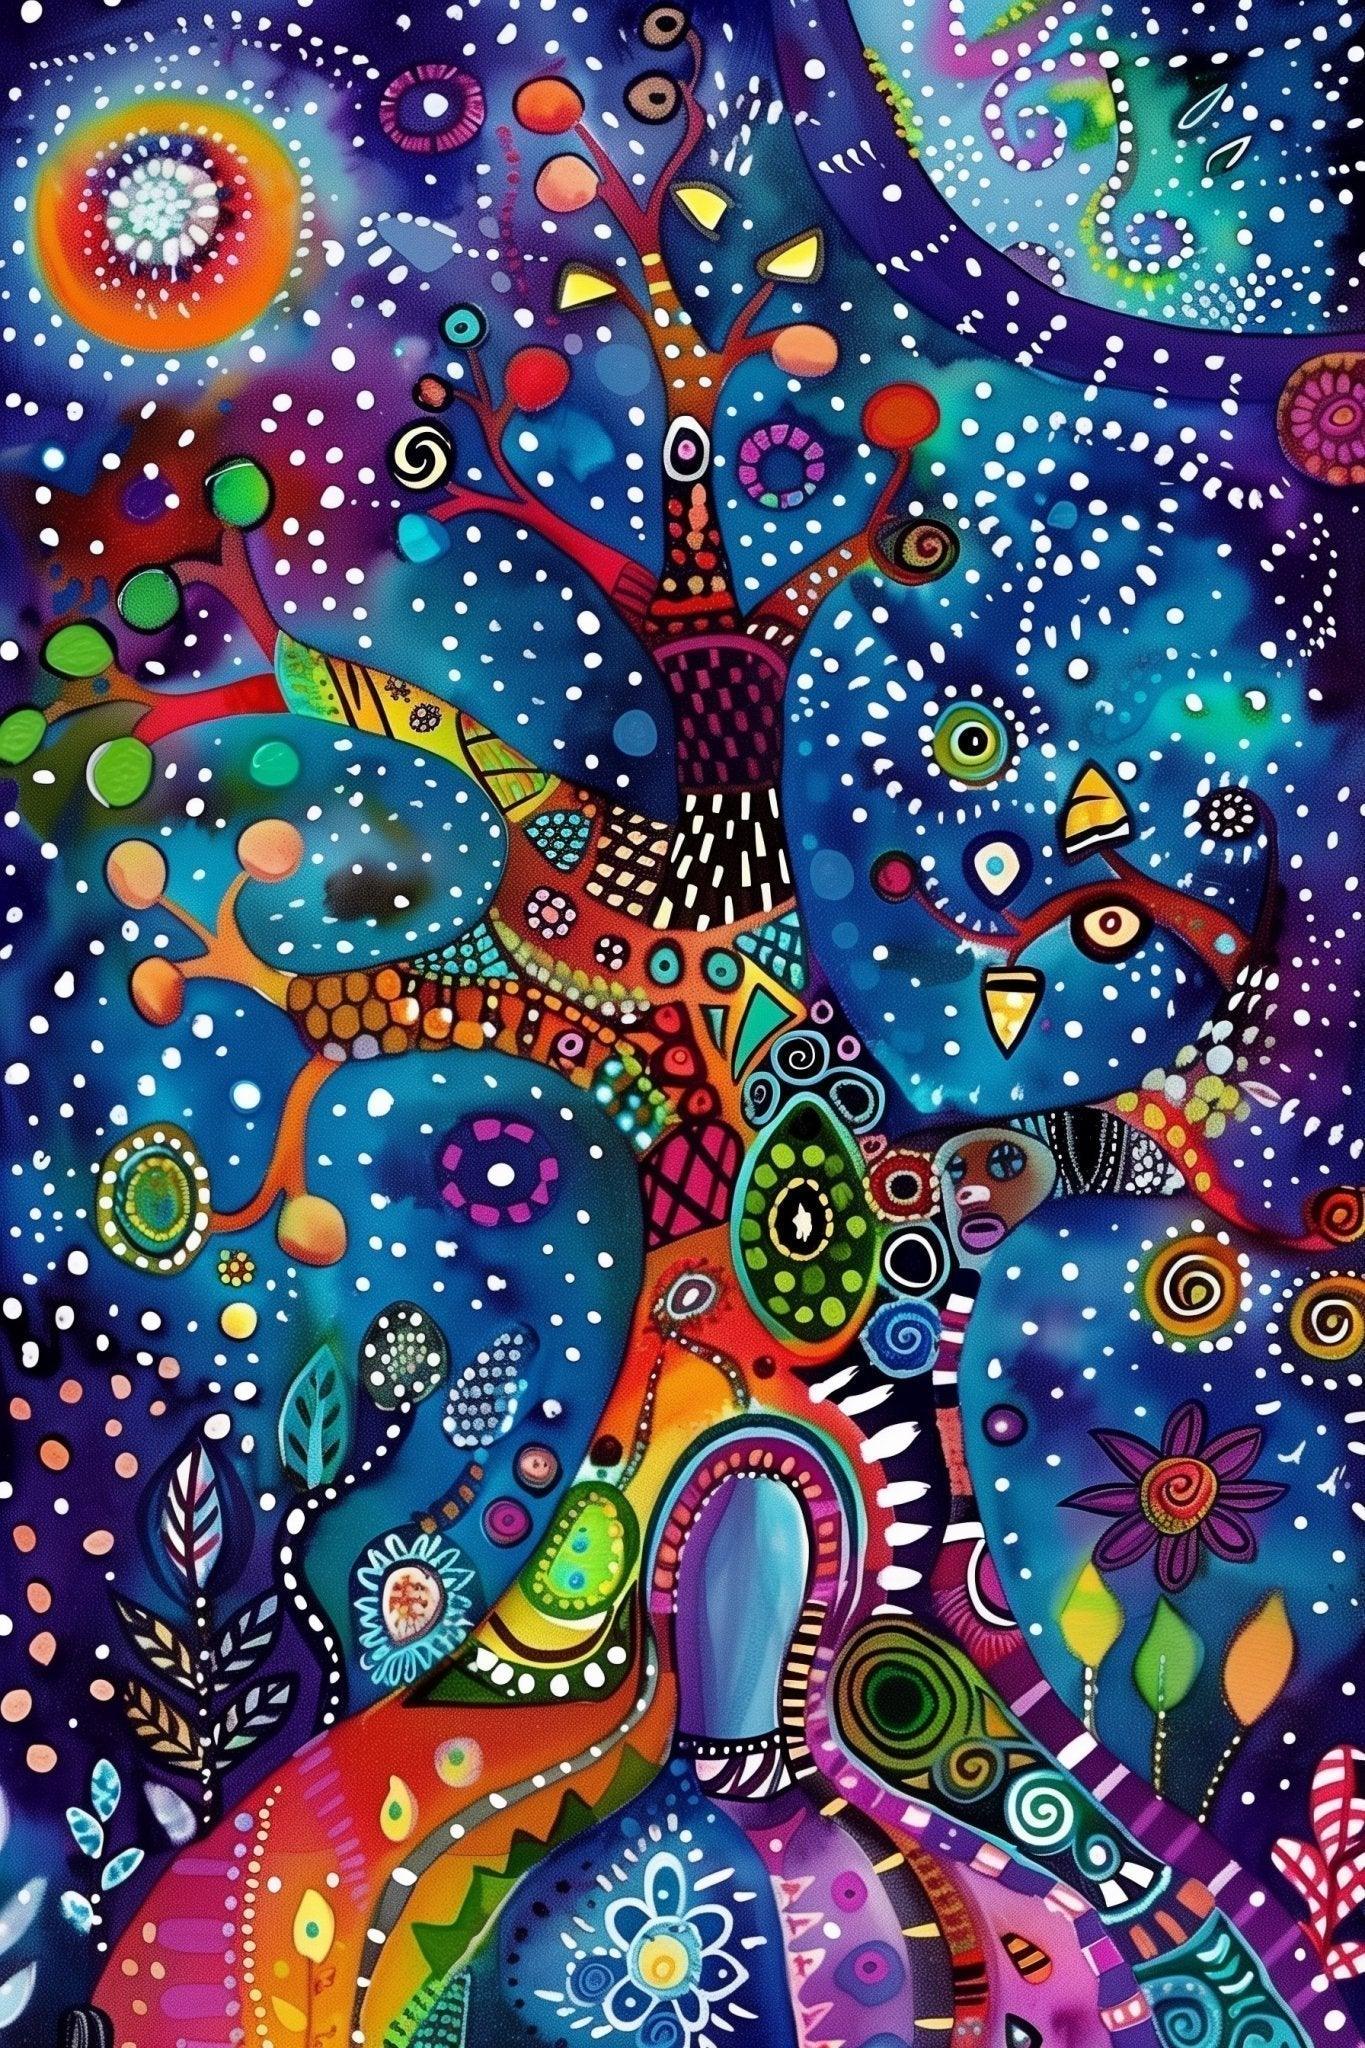 Surreal Kaleidoscope - Arboretum Art Print v.2 | Colorful Tree Wall Art | Artistic Home Decor Poster - Vivid Roads